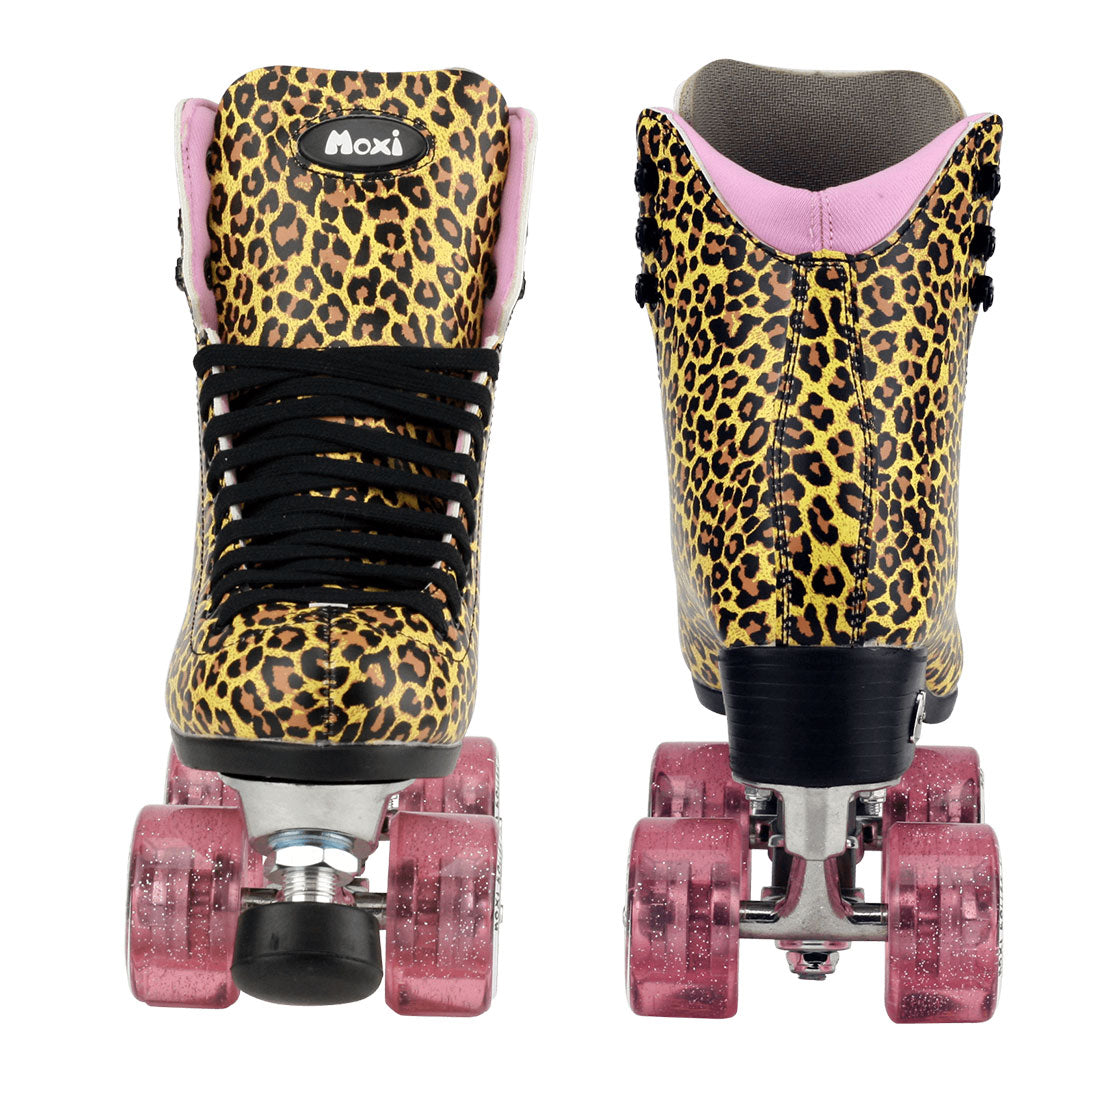 Moxi Jungle - Leopard Roller Skates